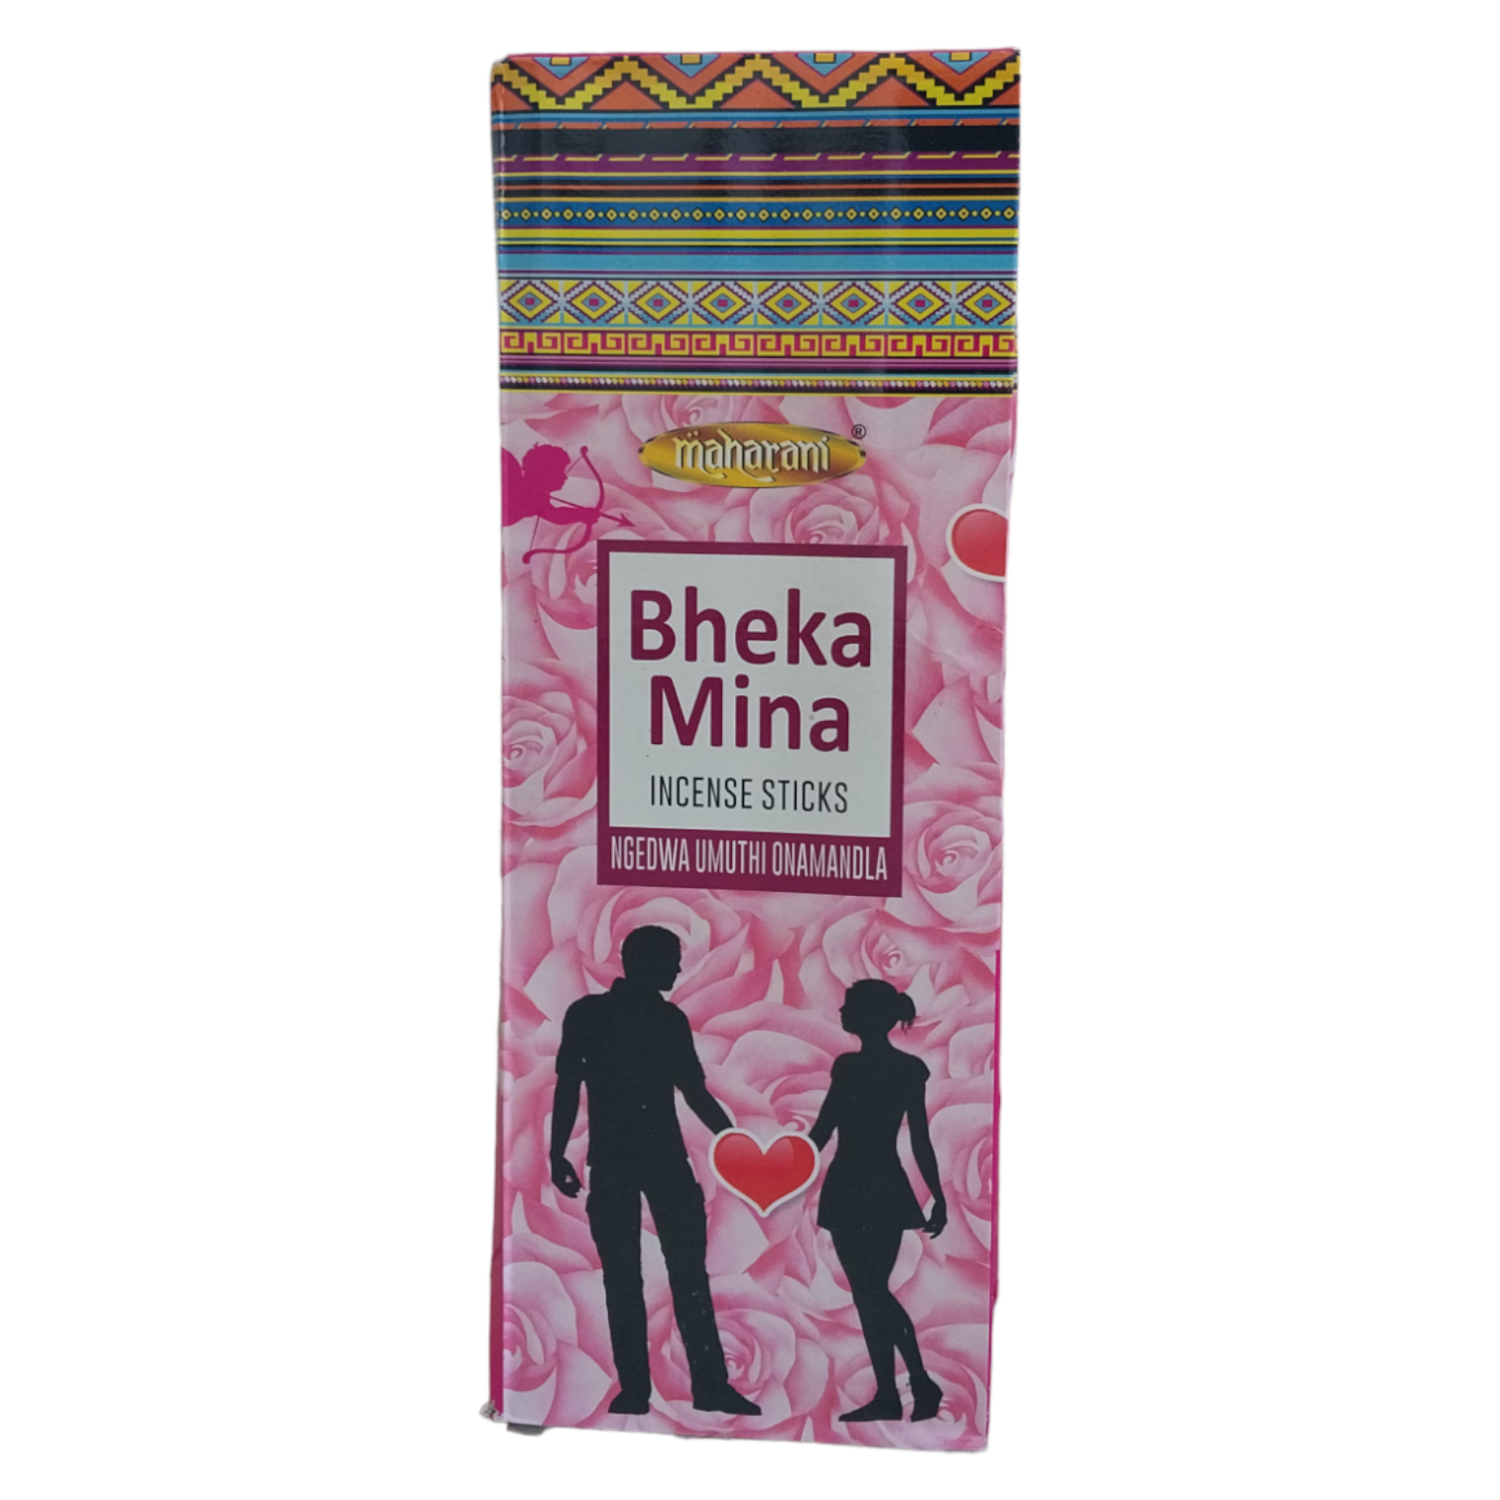 Incense Sticks - BHEKA MINA ( 6 Packs of 20 Sticks Each )